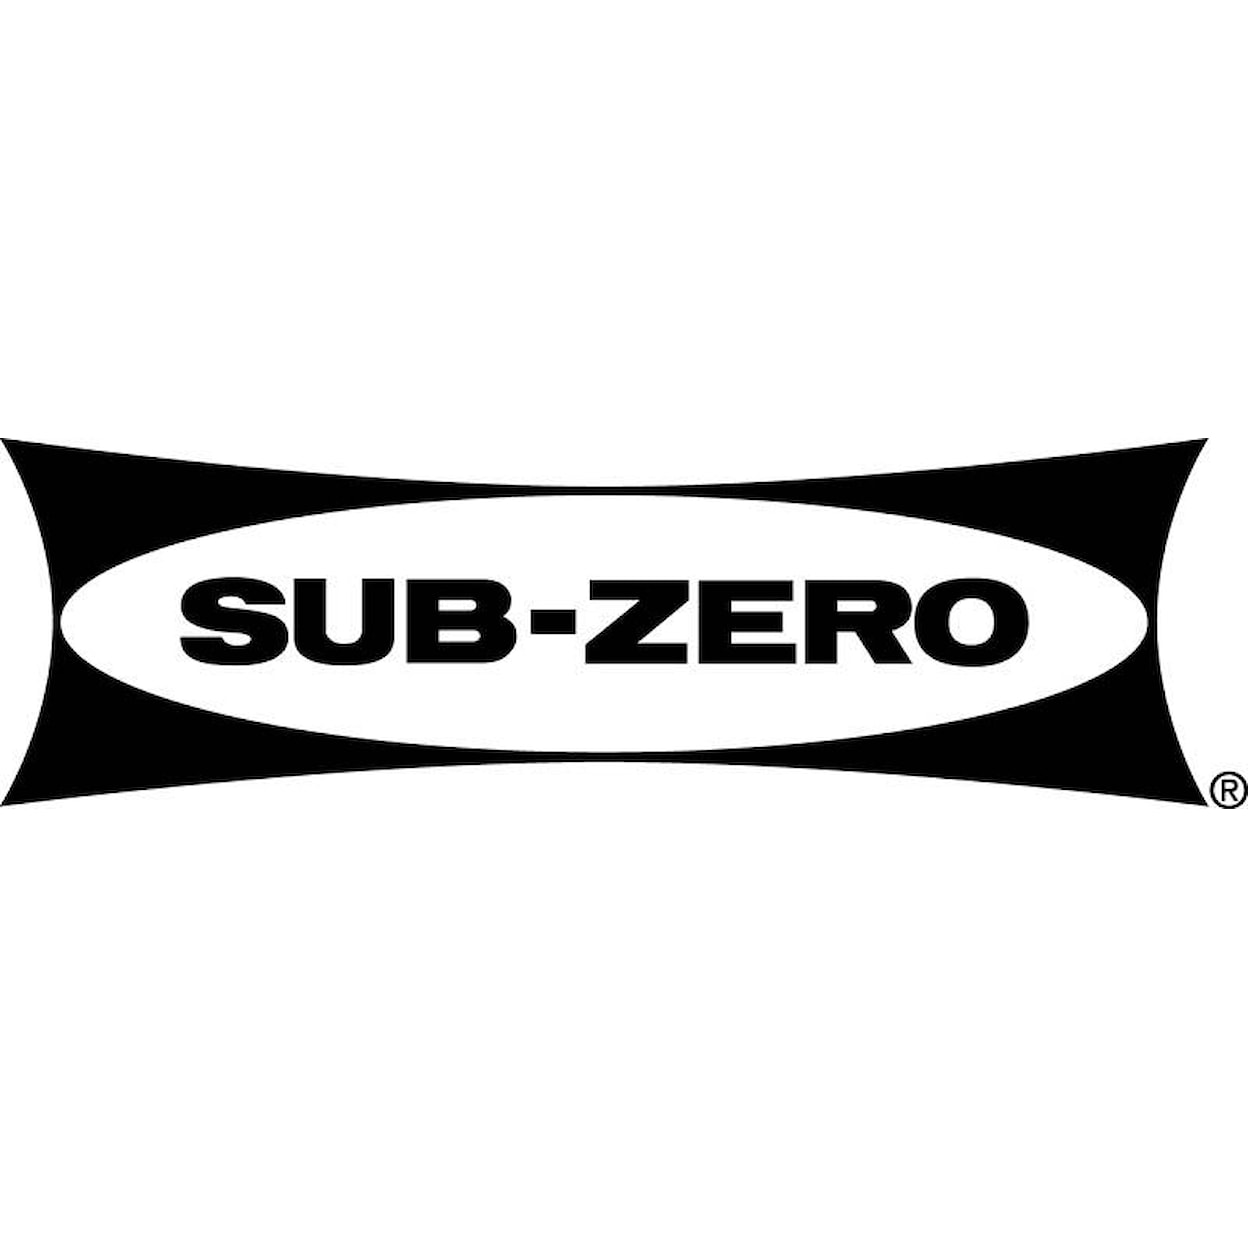 Sub-Zero PRO 48 Refrigeration 30.1 Cu. Ft. French-Door Refrigerator